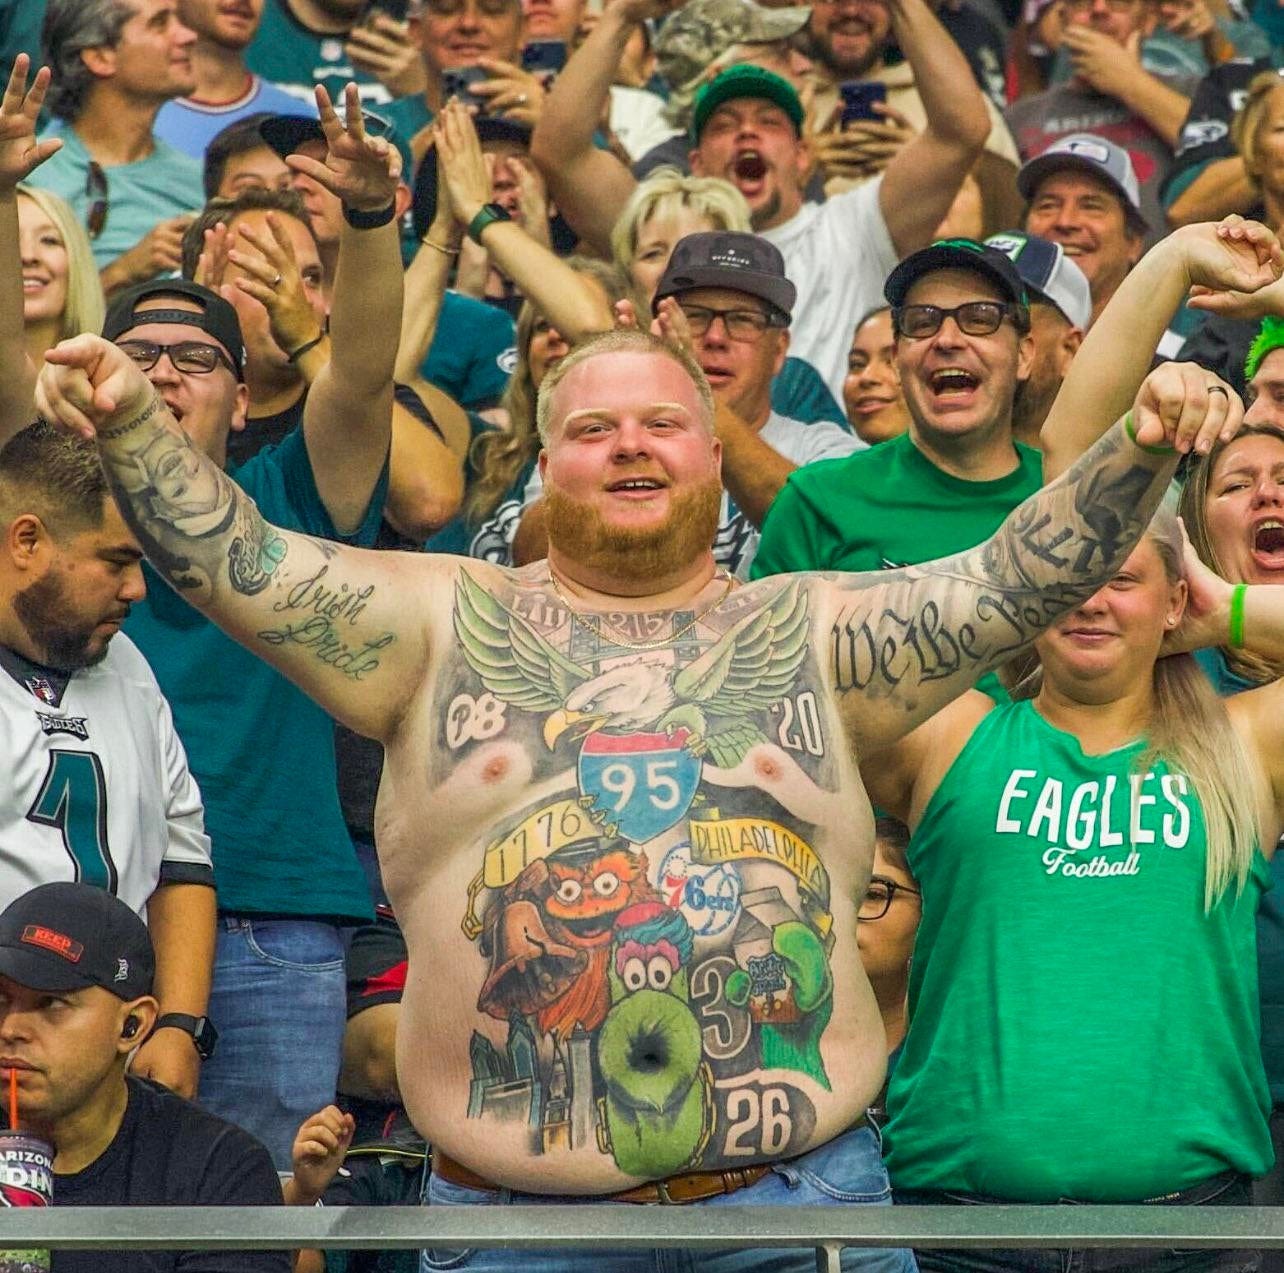 Eagles Fans showed out in Arizona 👏🏼 Go Birds 🦅 : r/eagles